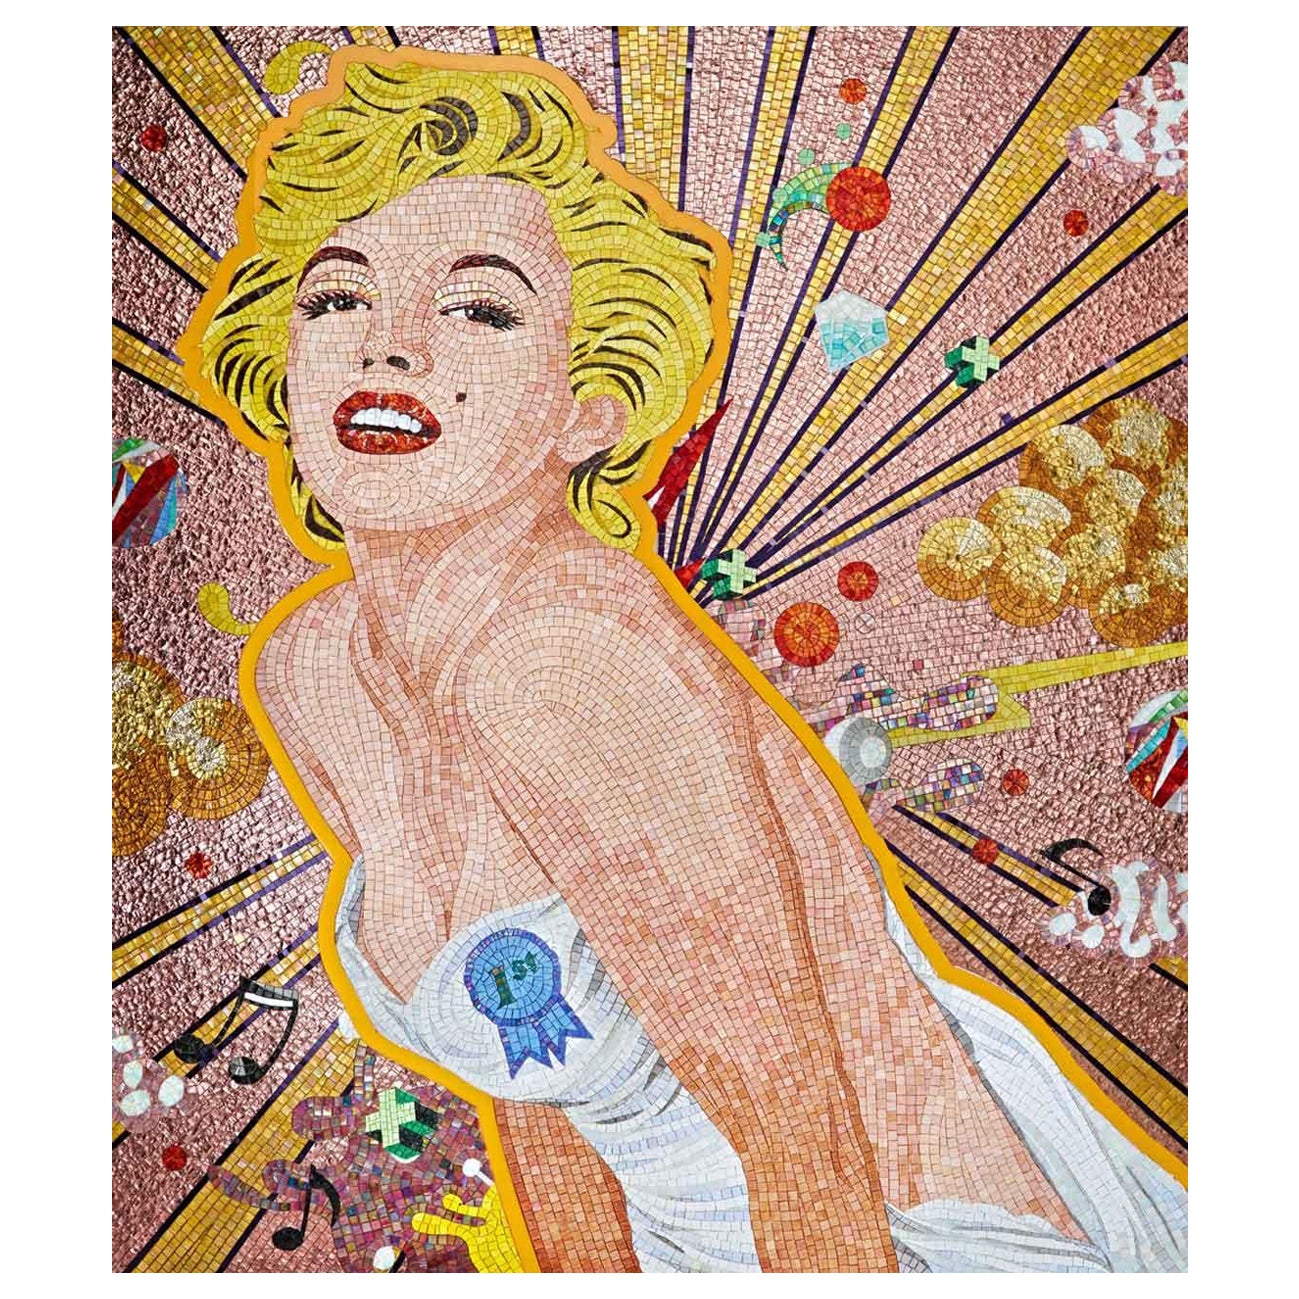 Colourful Handmade Artistic Mosaic Merilyn Pop Bespoke Options Available For Sale